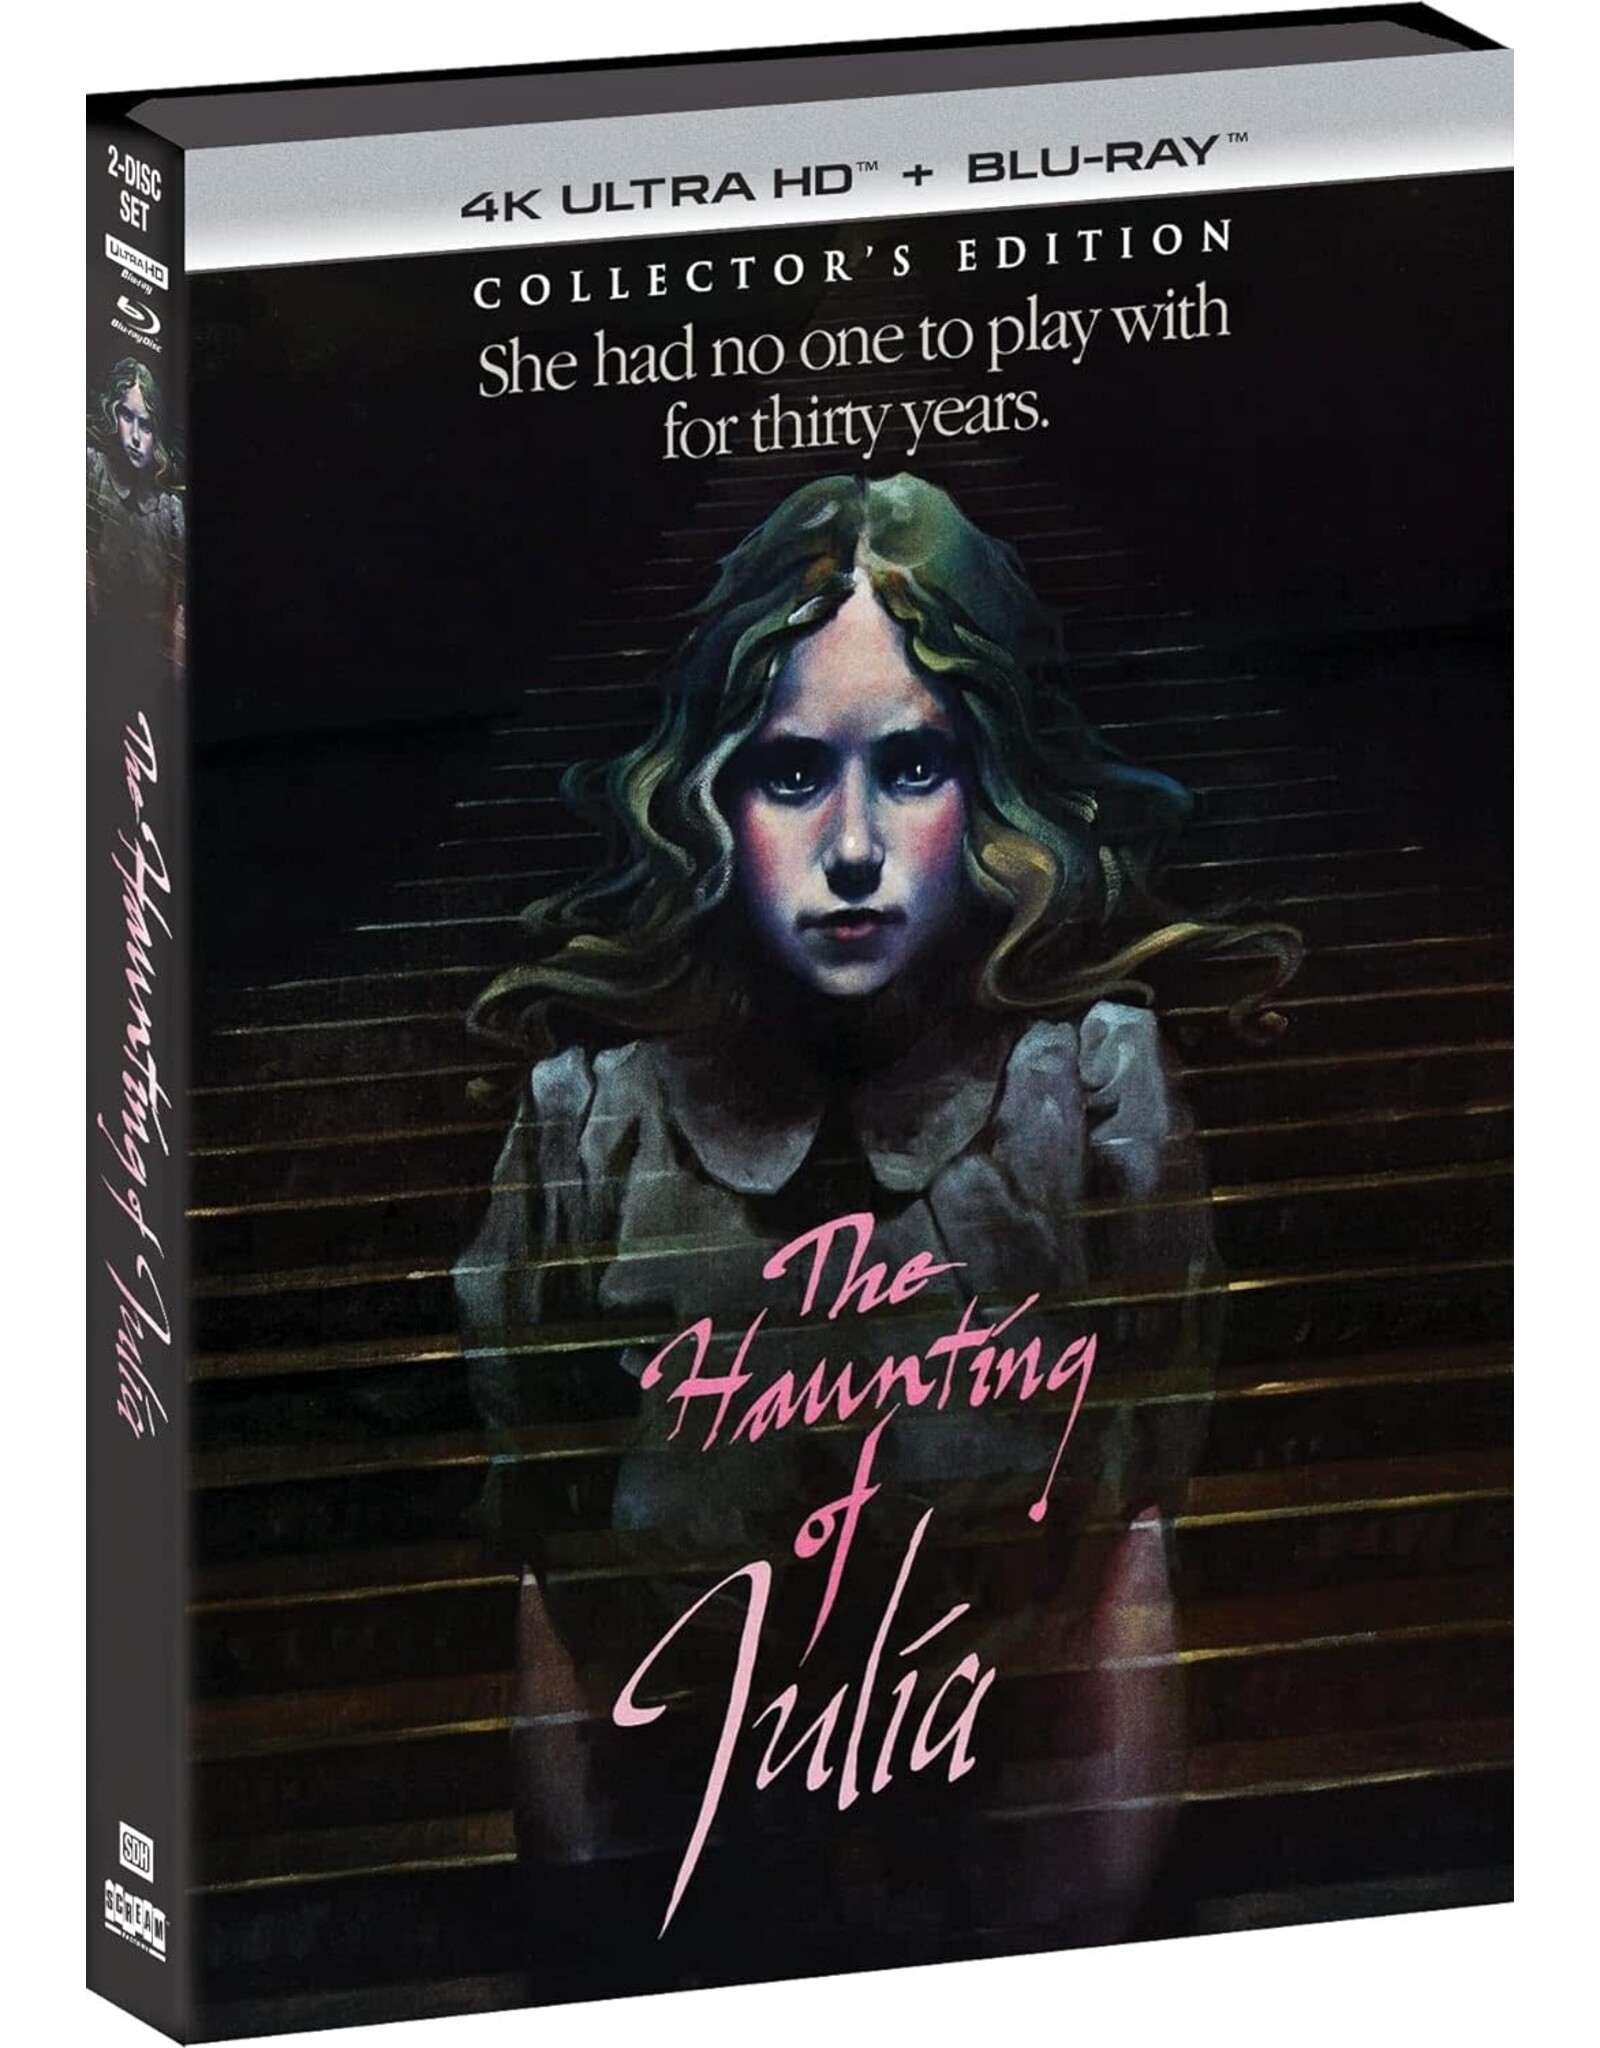 Horror Haunting of Julia, The - Scream Factory (4K UHD, Brand New, w/ Slipcover)